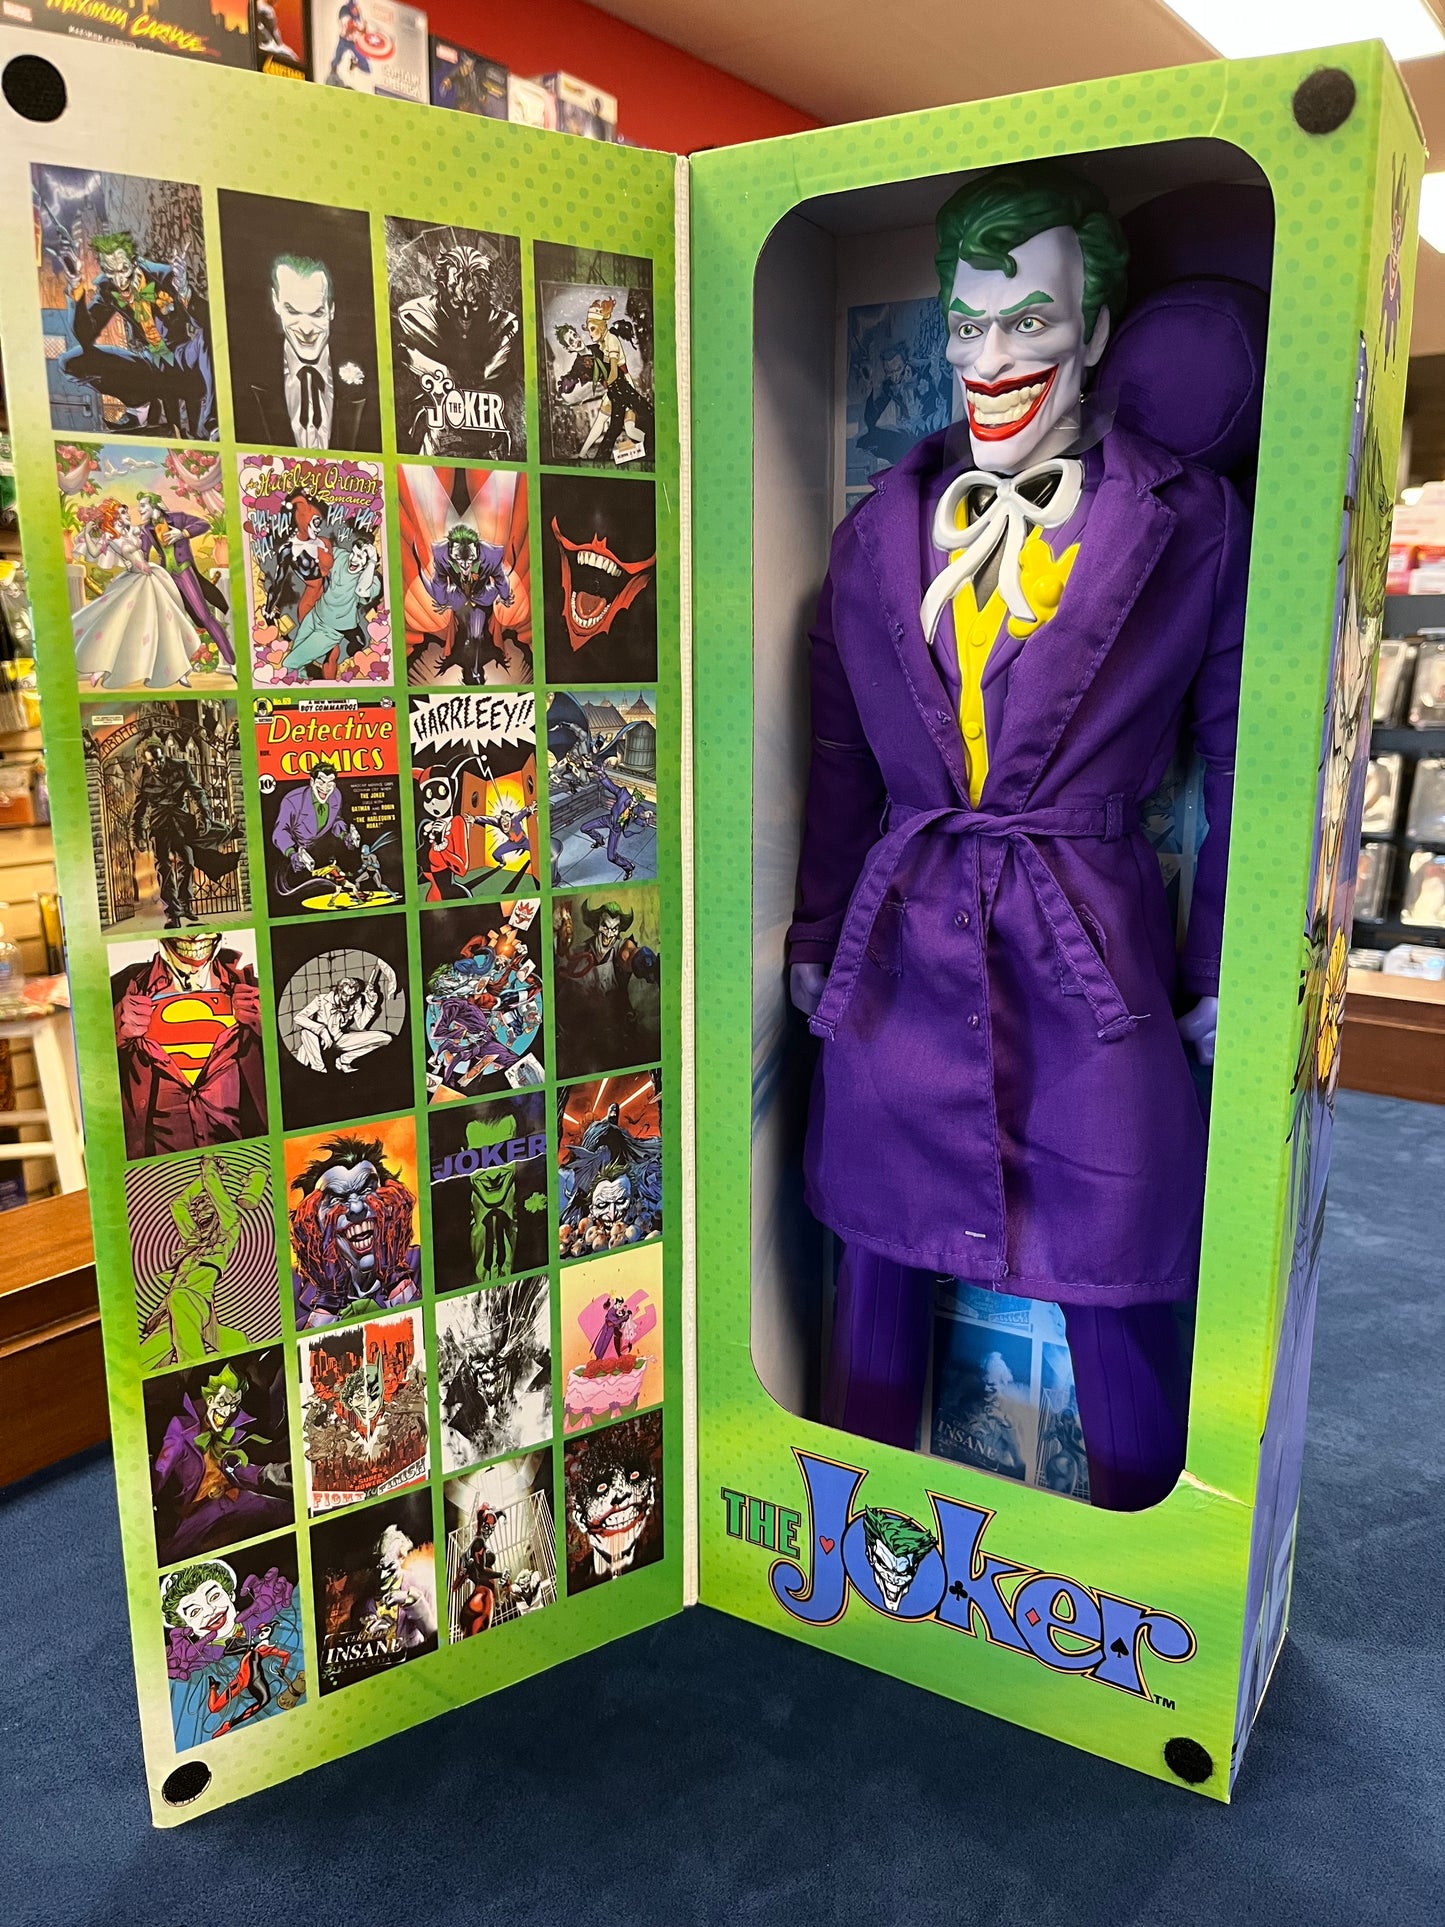 DC Originals Big-Figs: 05 Joker Figure